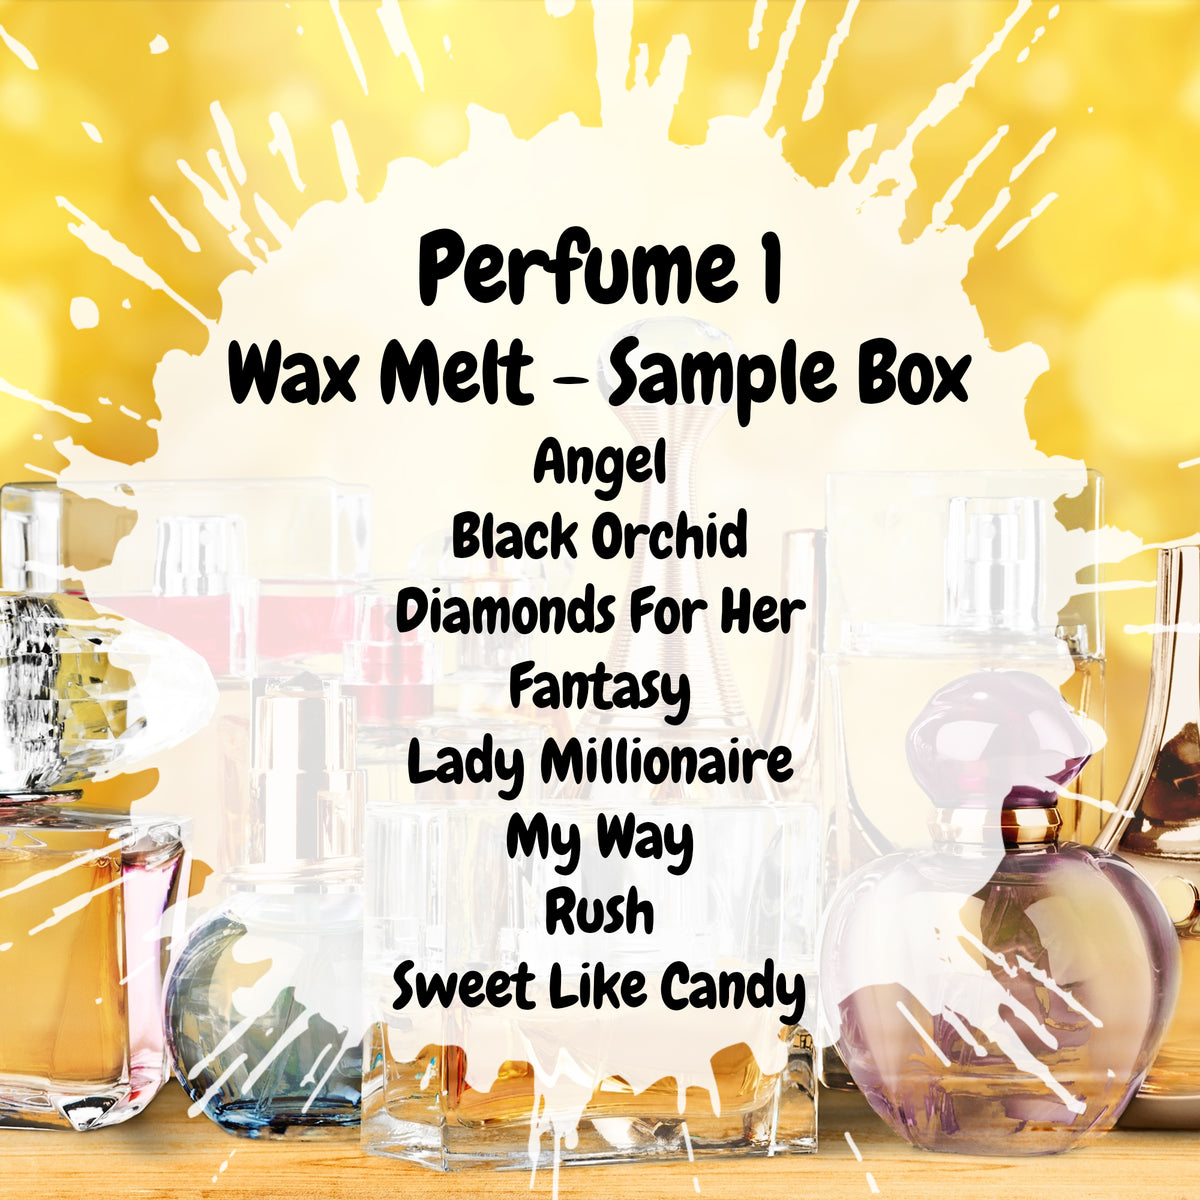 Perfume 1 Wax Melt Sample Box